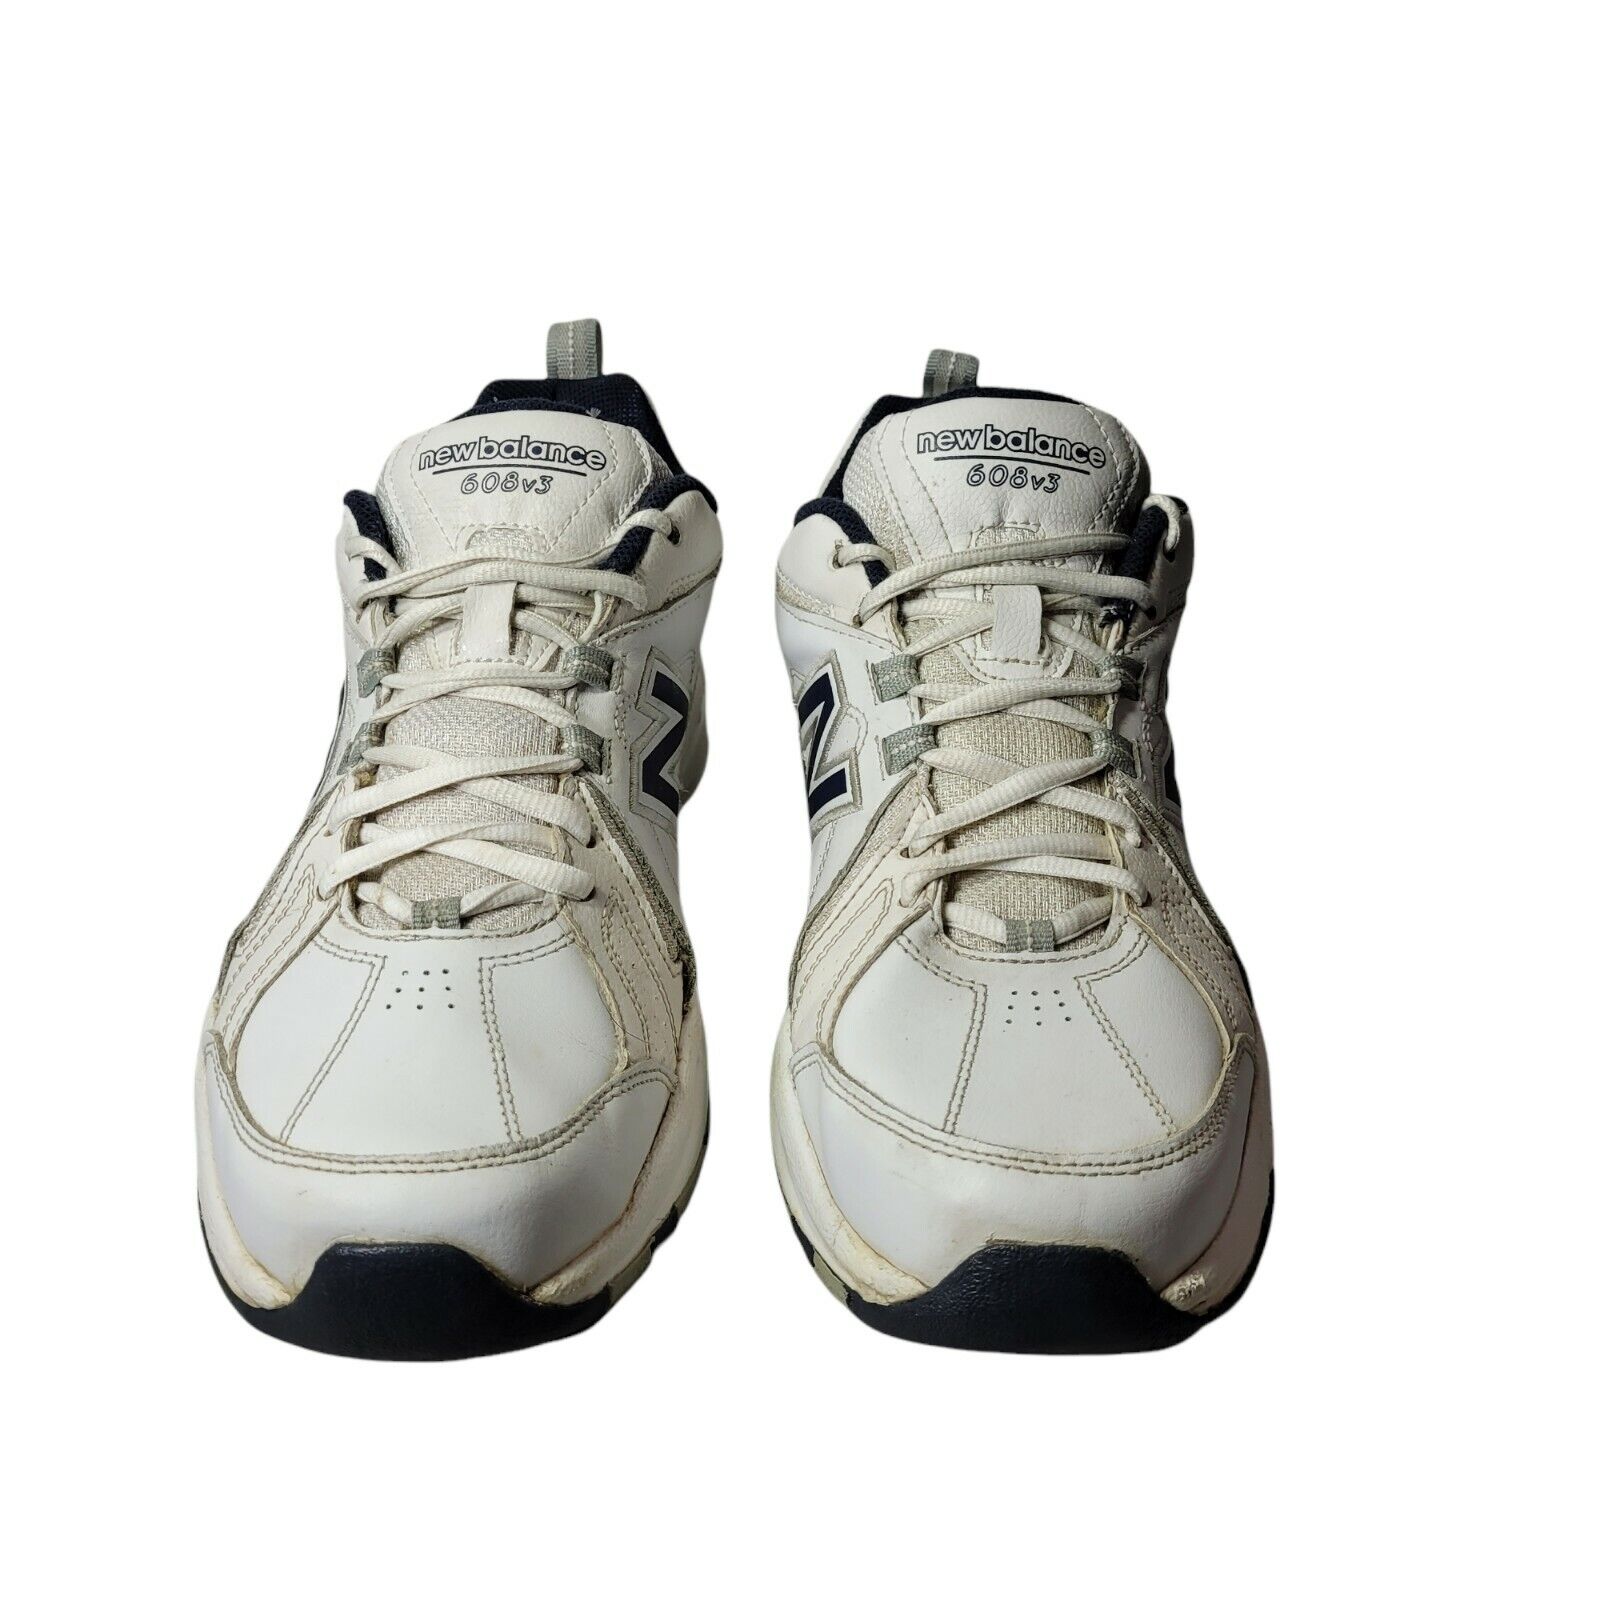 New Balance 608 Mens Size 10.5 D Shoes White Blue Walking Comfort eBay